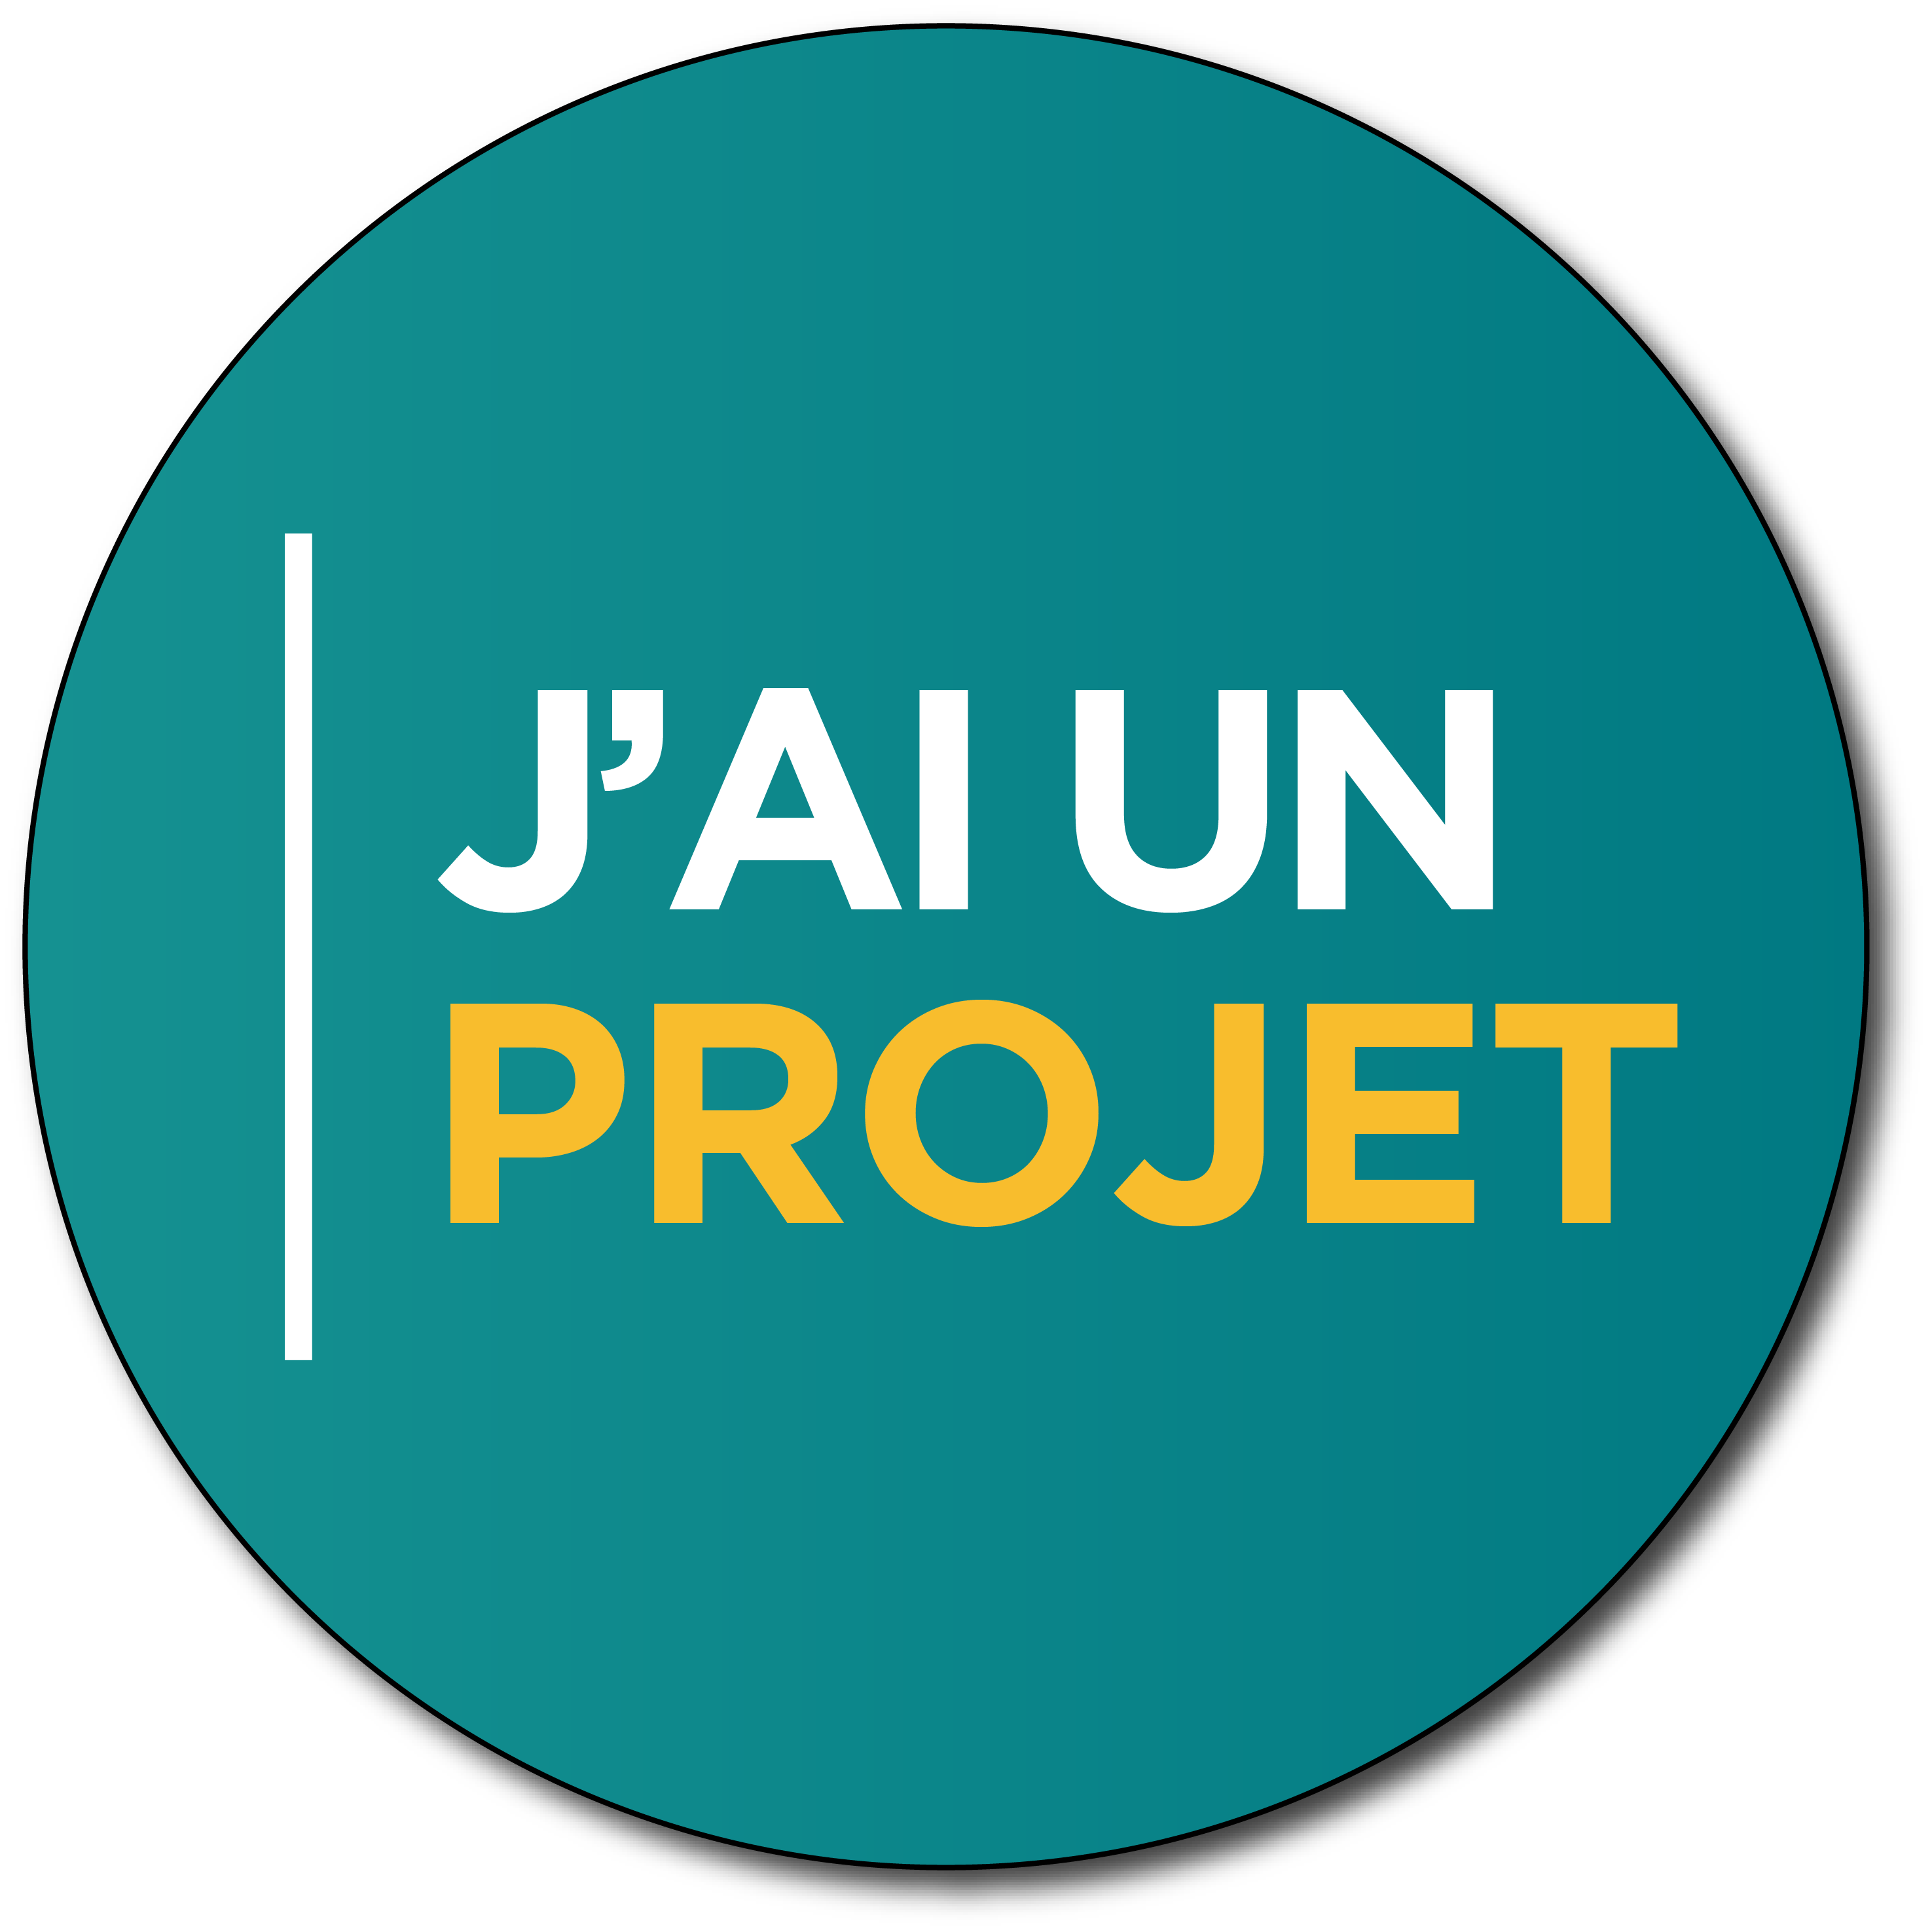 projets étudiants www.jaiunprojet.uvsq.fr